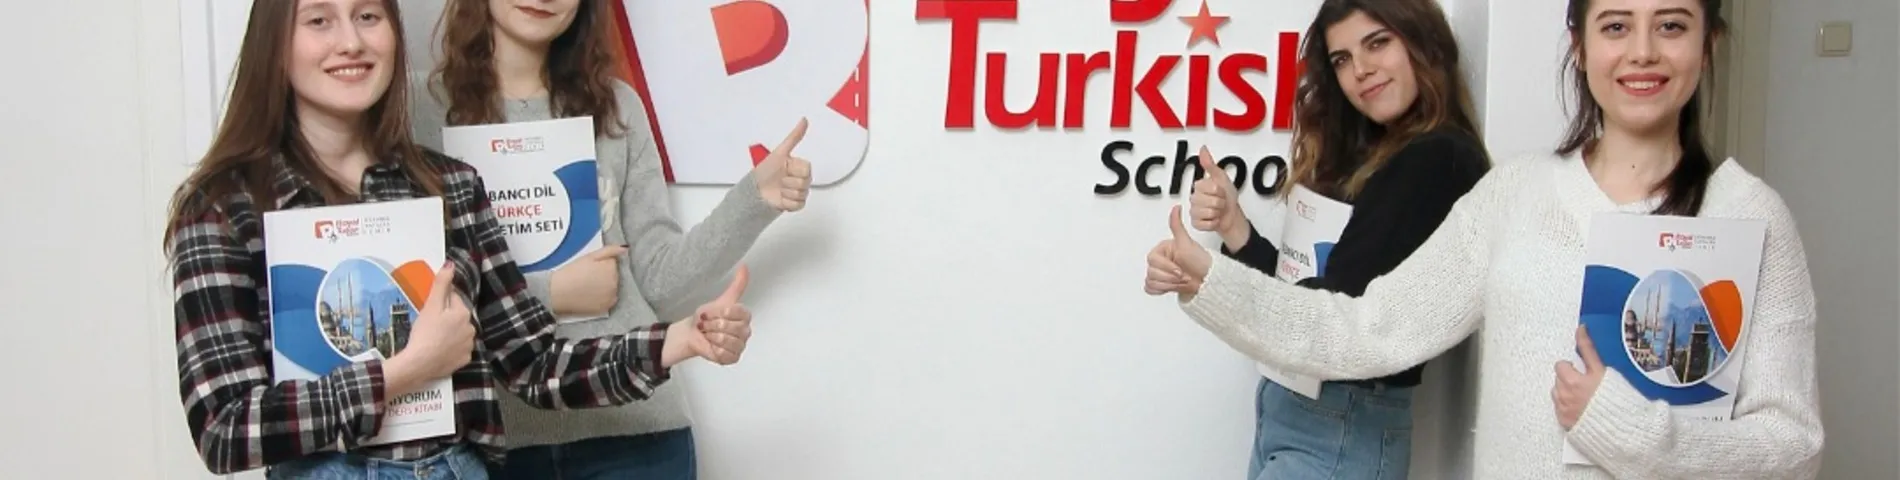 Royal Turkish Education Center bild 1